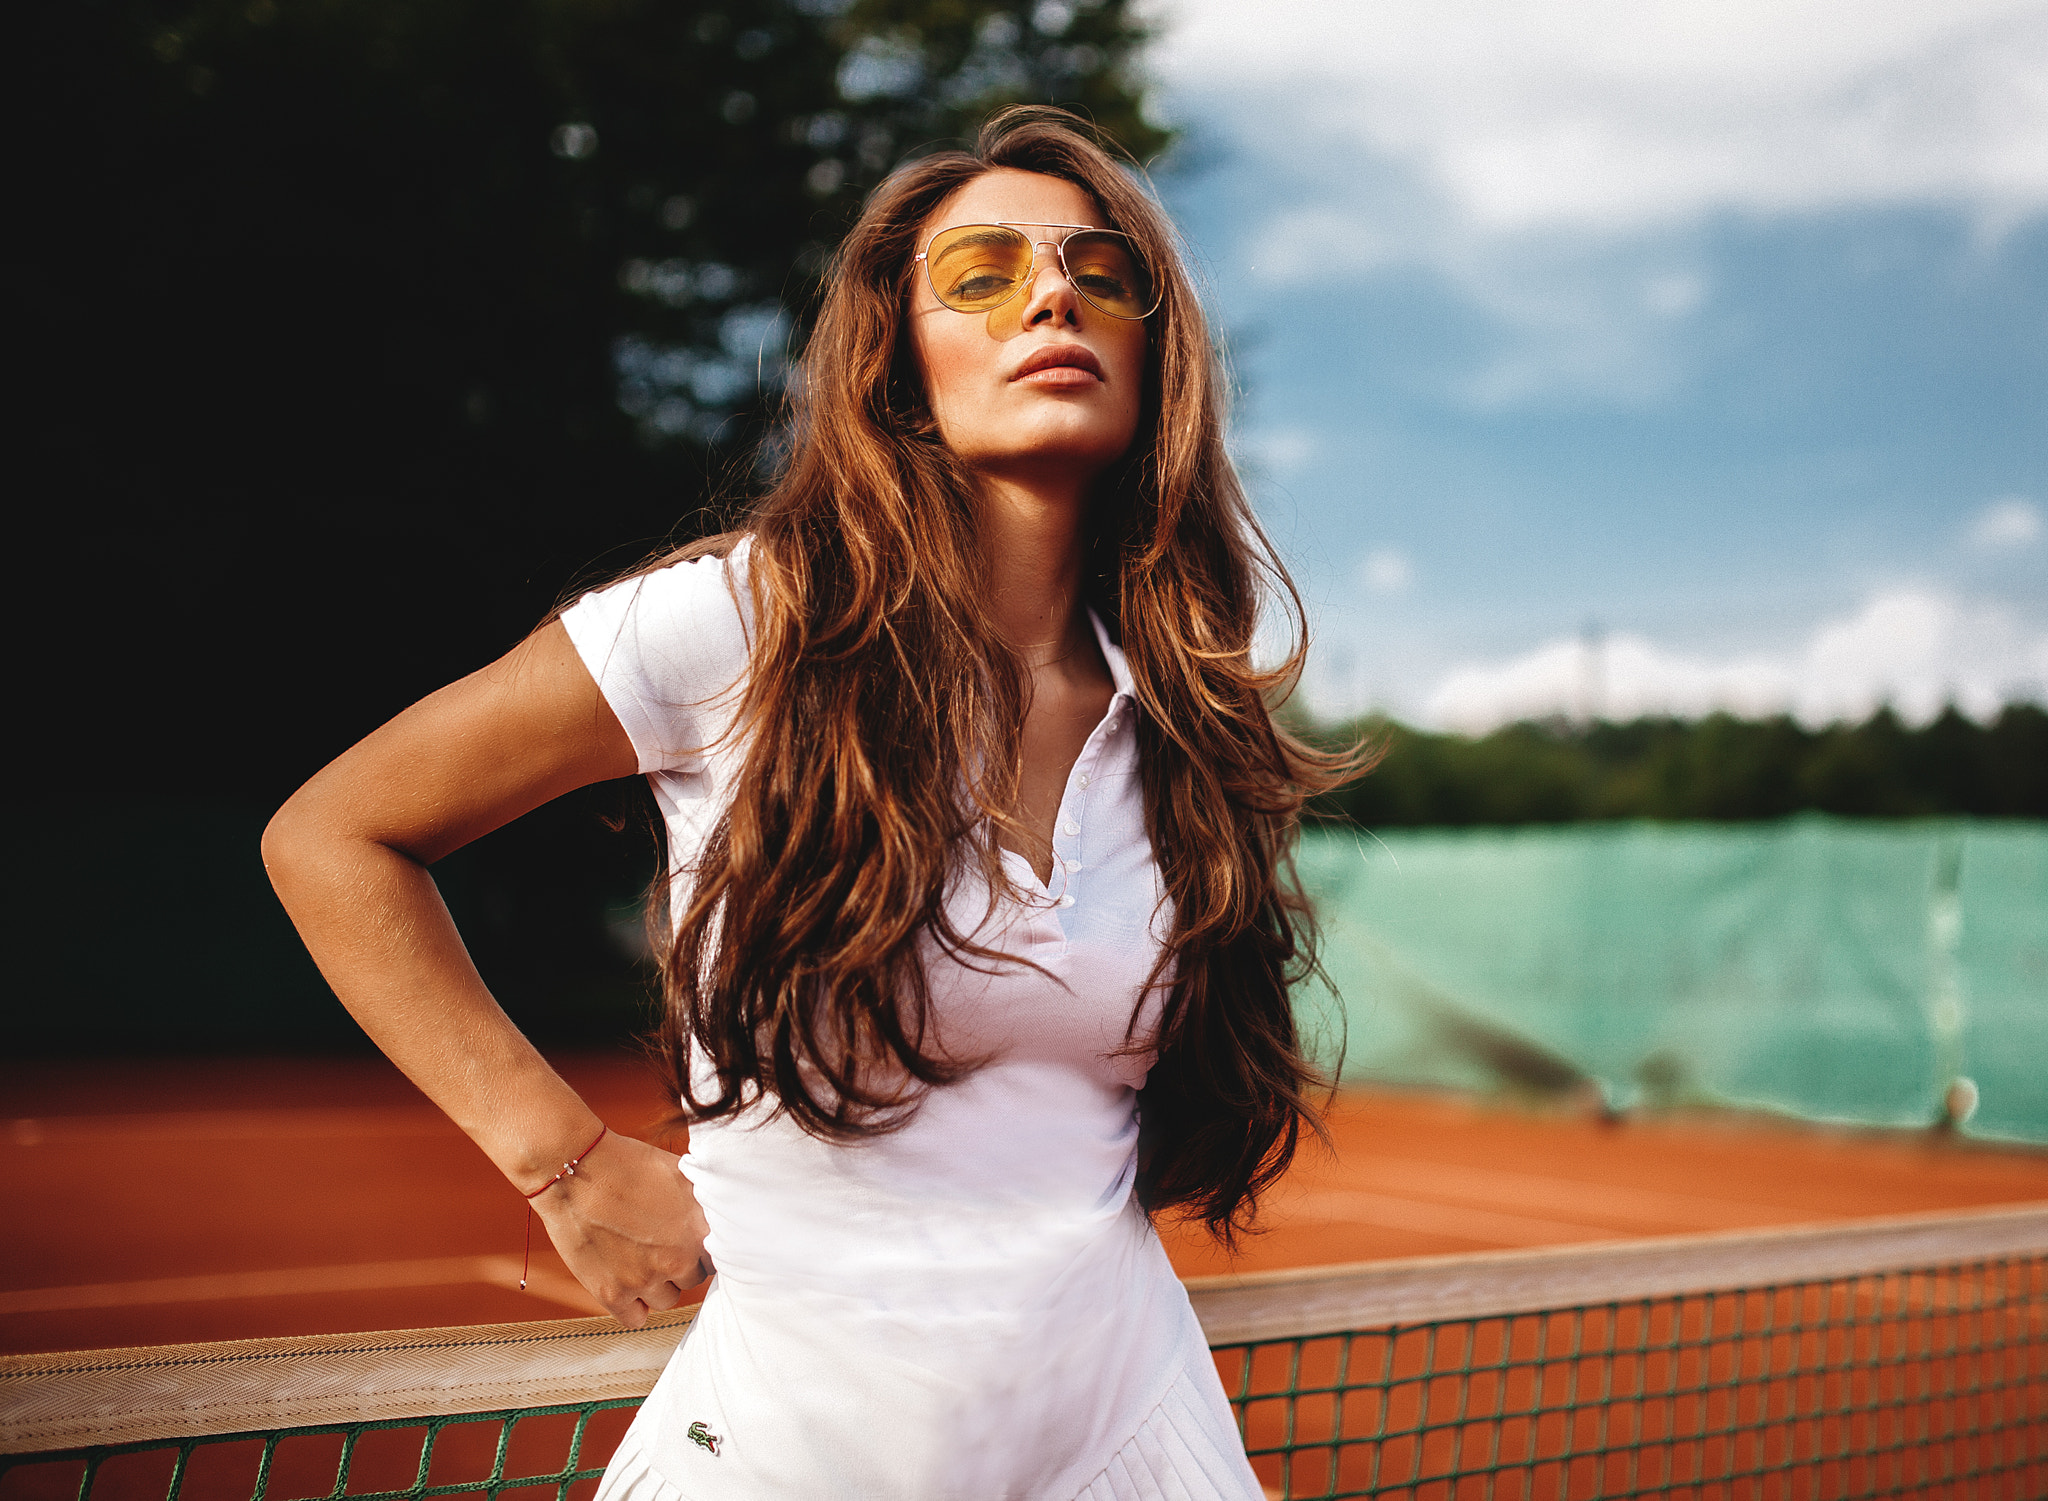 Women Portrait Women Outdoors White Clothing Tanned Sunglasses Lacoste Tennis Courts Brunette Long H 2048x1501